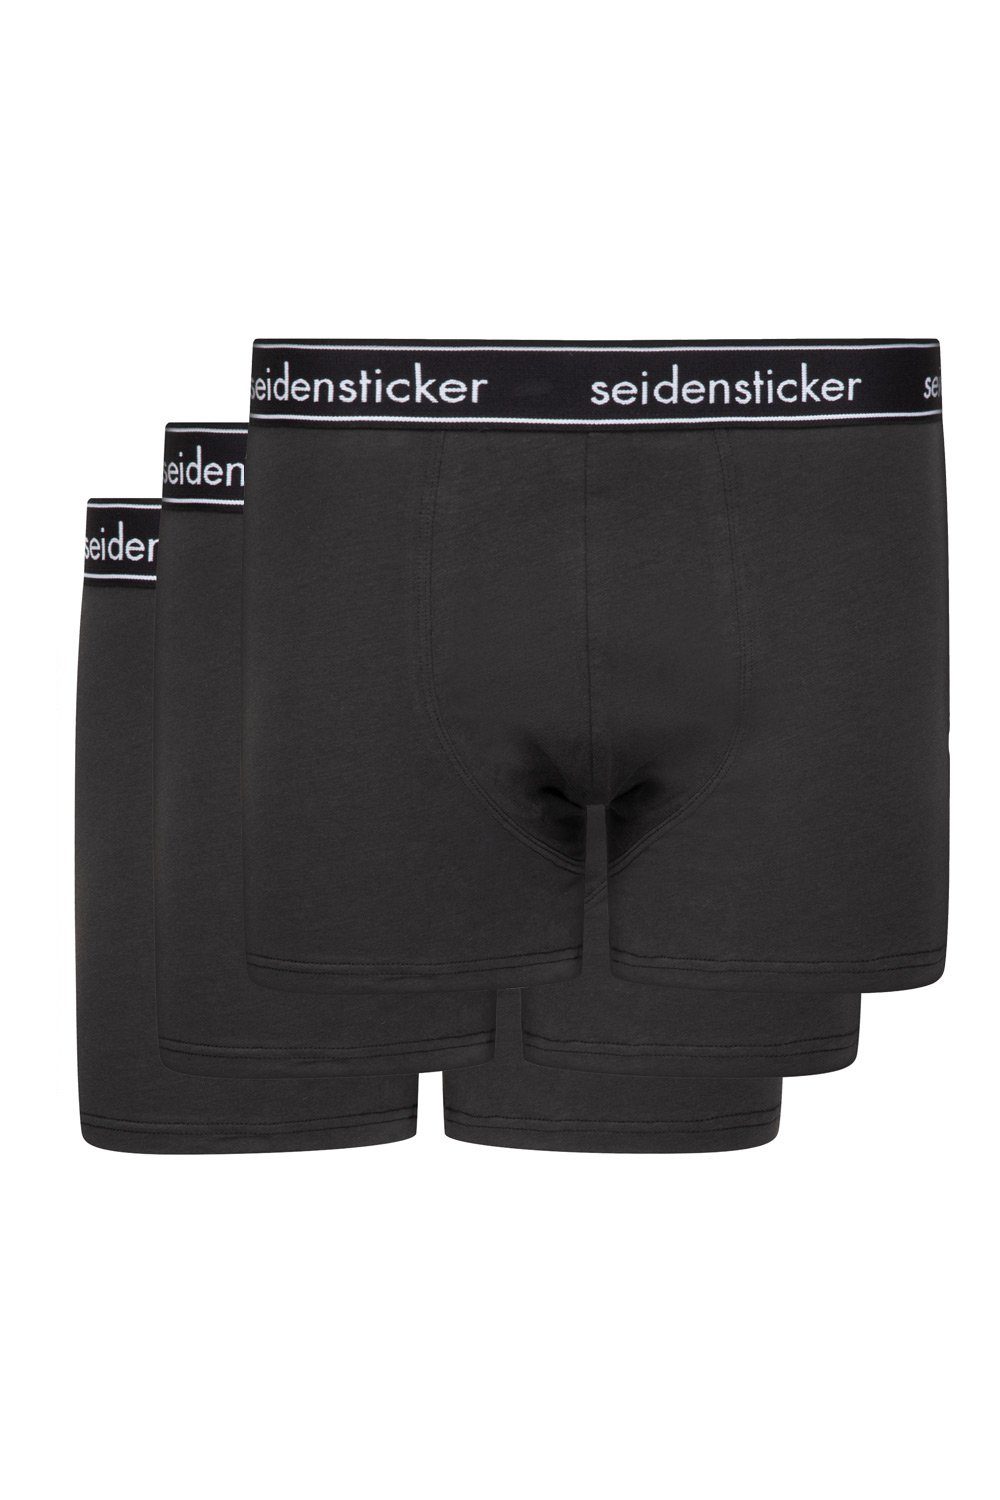 seidensticker Boxershorts Boxer Trunk Cotton Flex, 3er-Pack 200021 (3er-Pack)